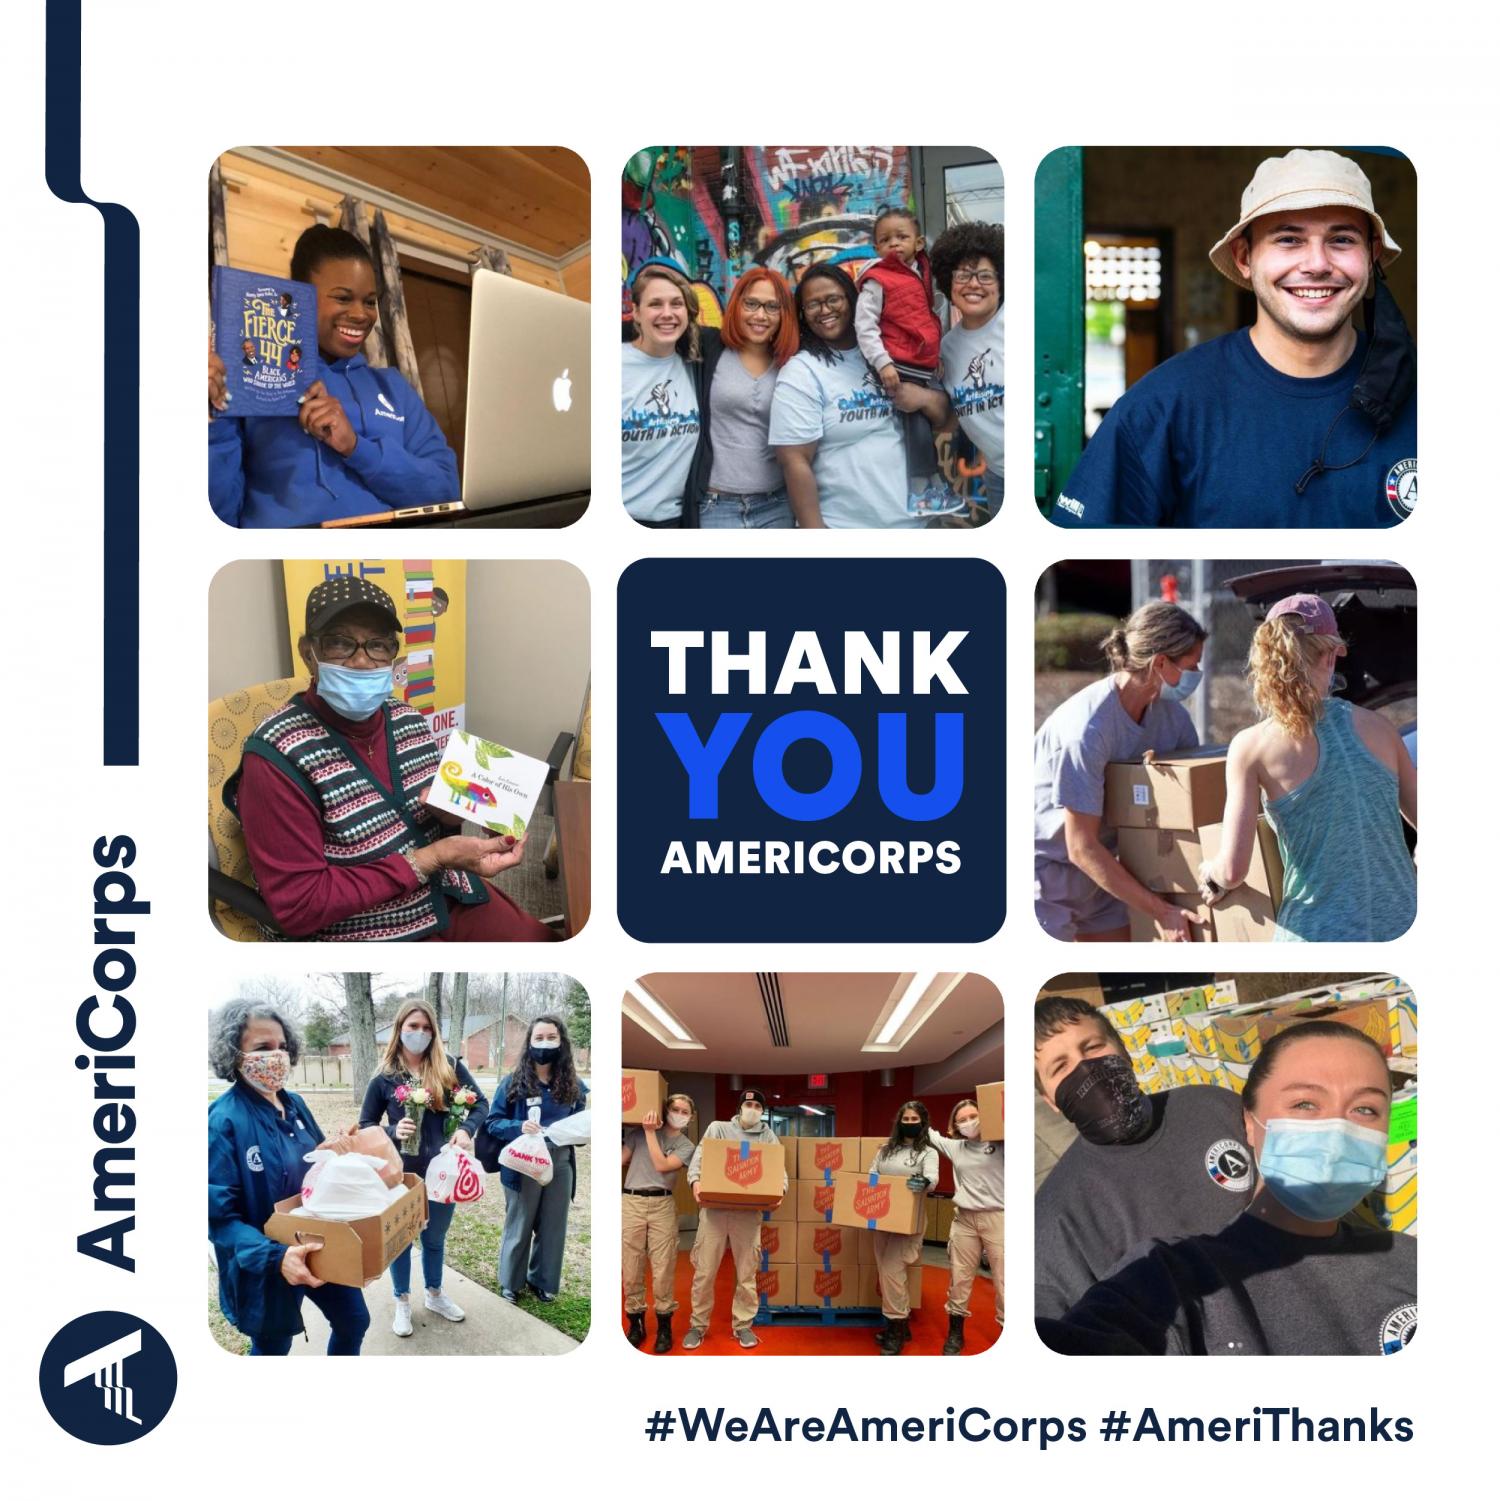 Thank you AmeriCorps, #WeAreAmeriCorps #AmeriThanks